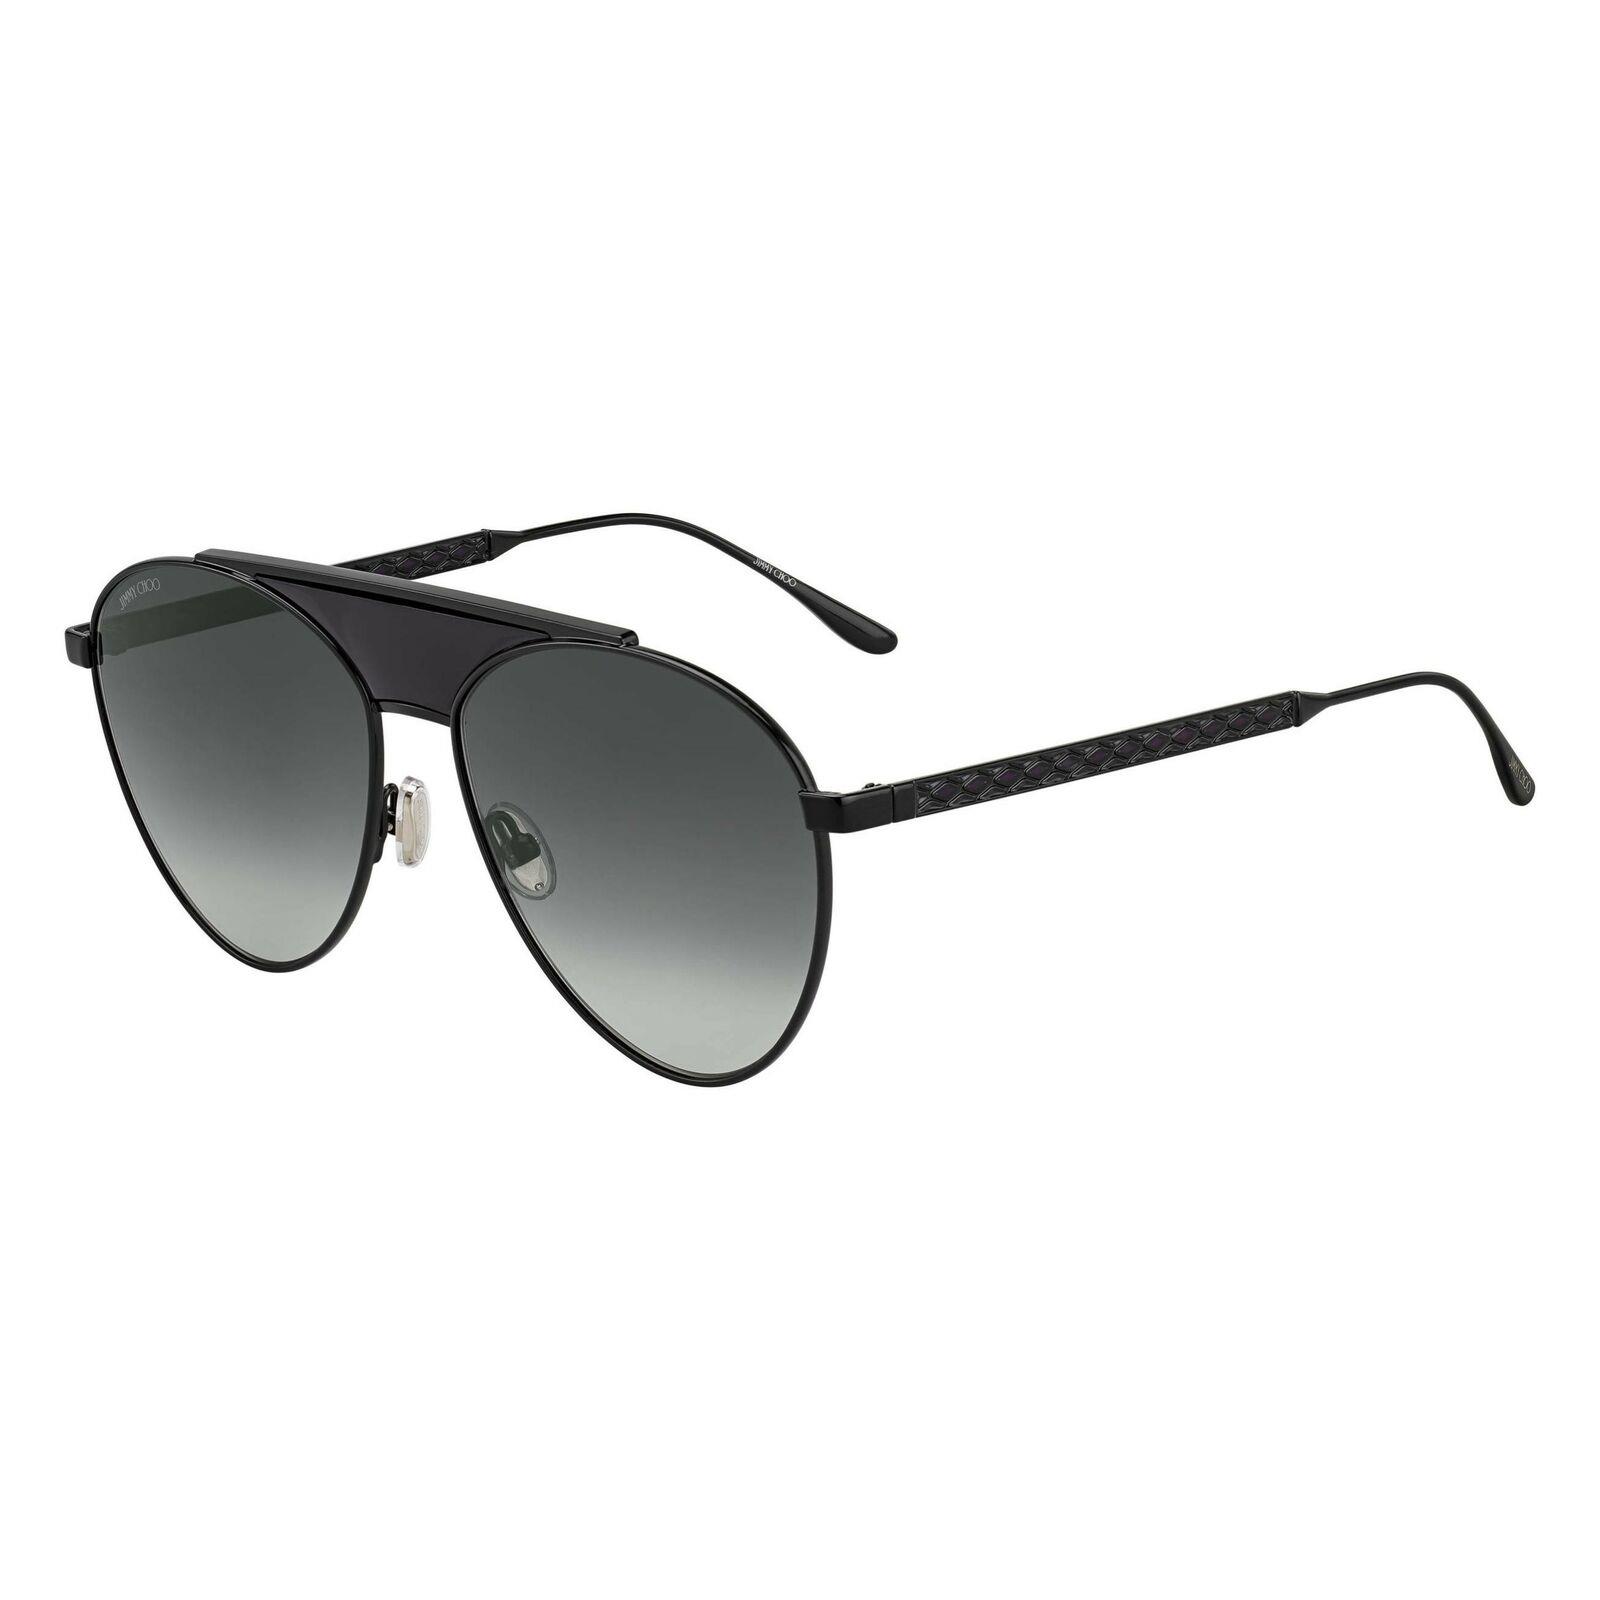 Jimmy Choo Ave/s 807 90 Black Sunglasses